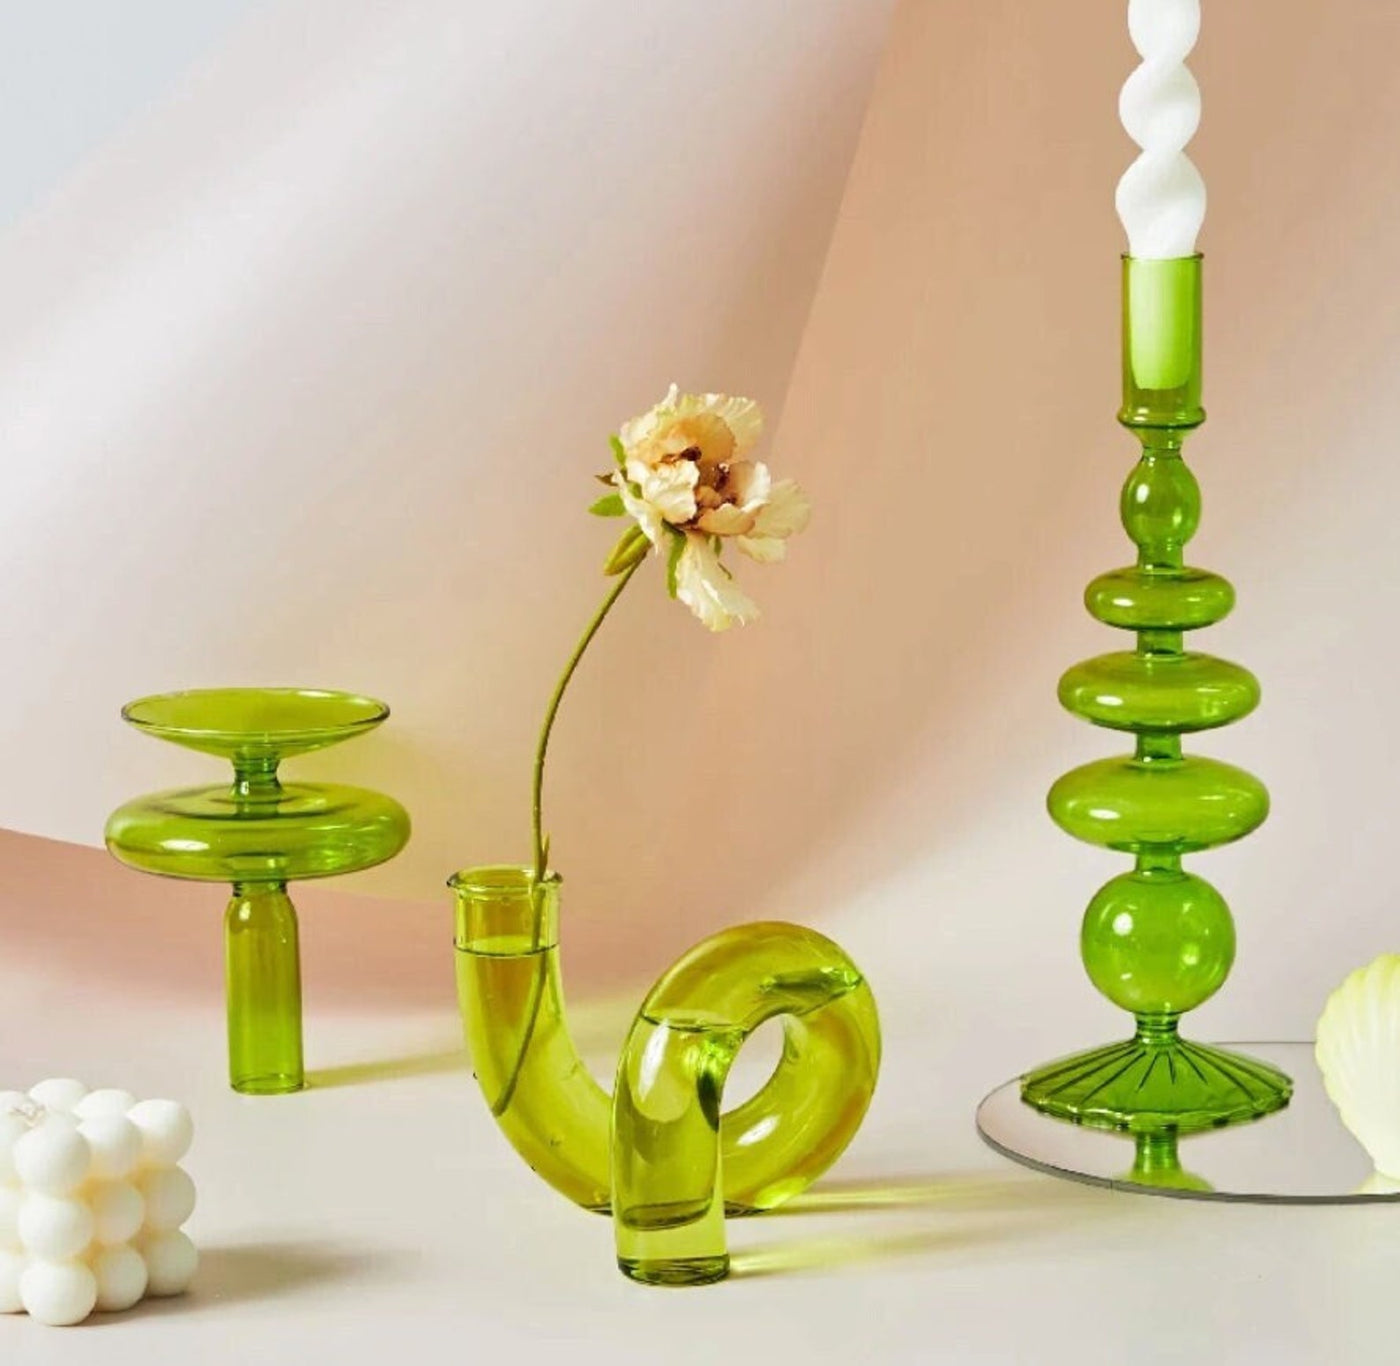 Candlesticks & Vases